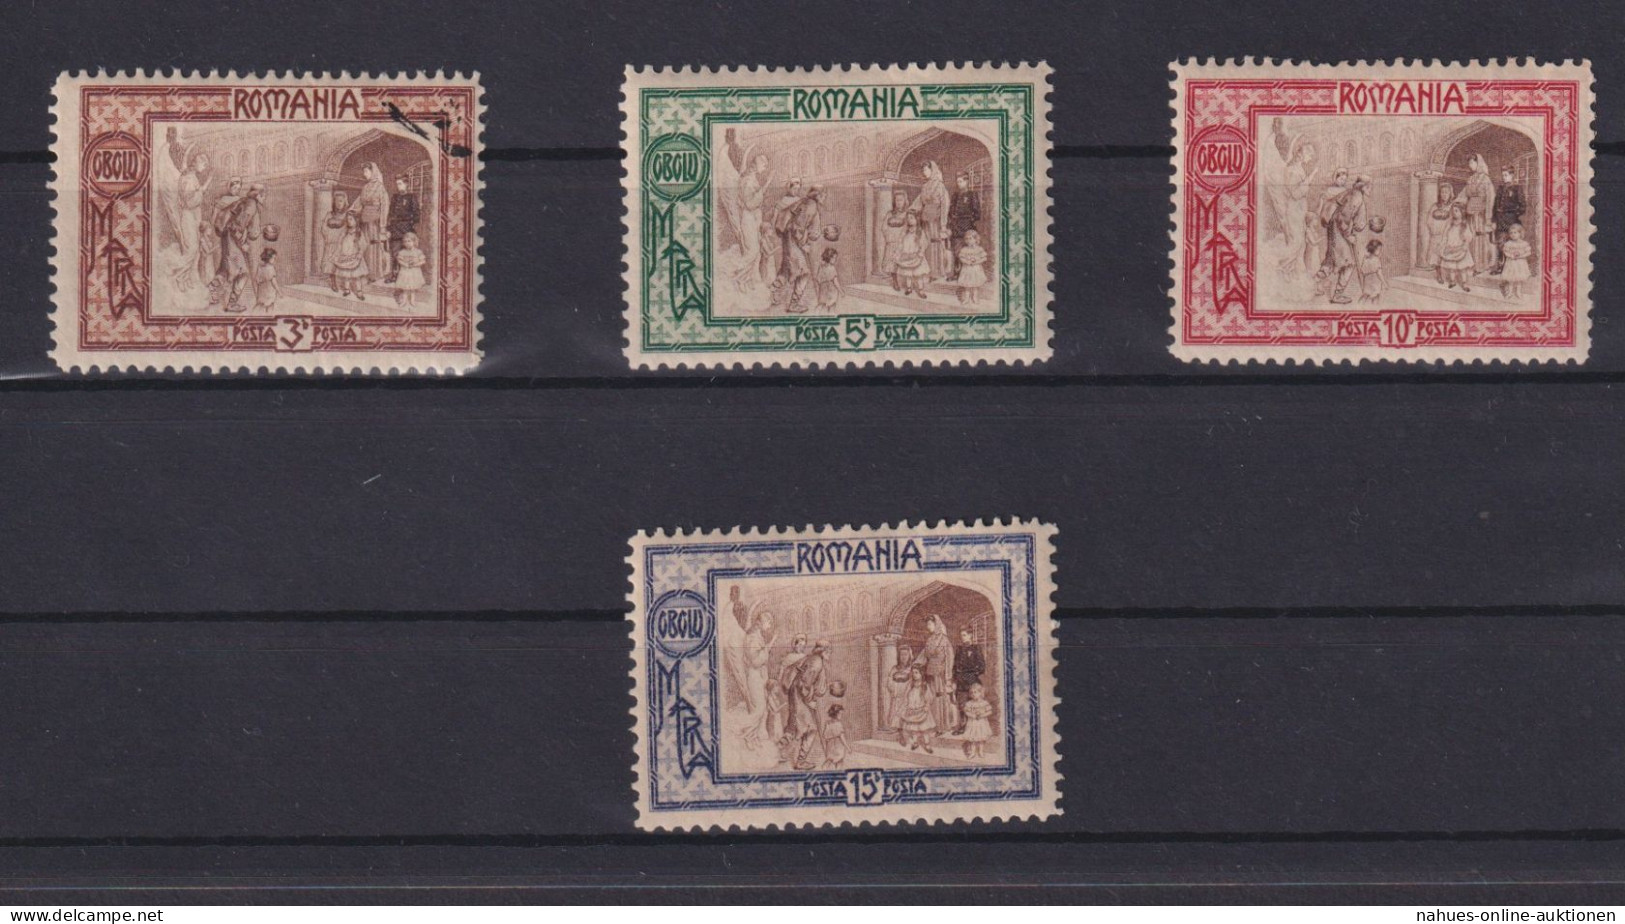 Briefmarken Rumänien 208-211 Amenpflege Sauber Ungebraucht Kat. 20,00 - Covers & Documents